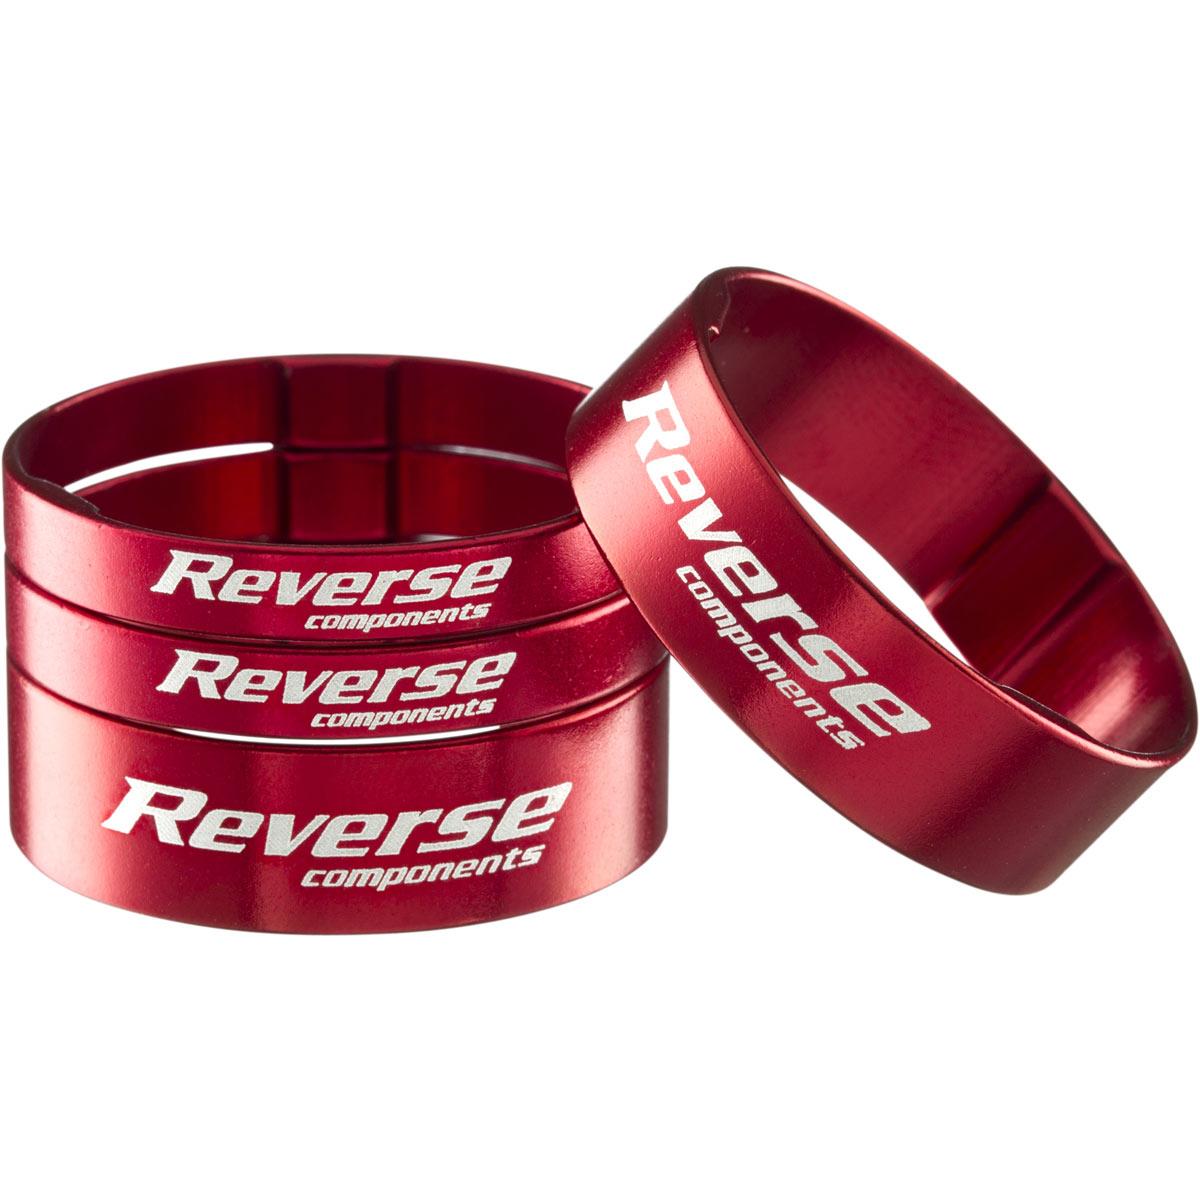 Reverse Components Kit Distanziali Serie Sterzo Ultra-Light Rosso